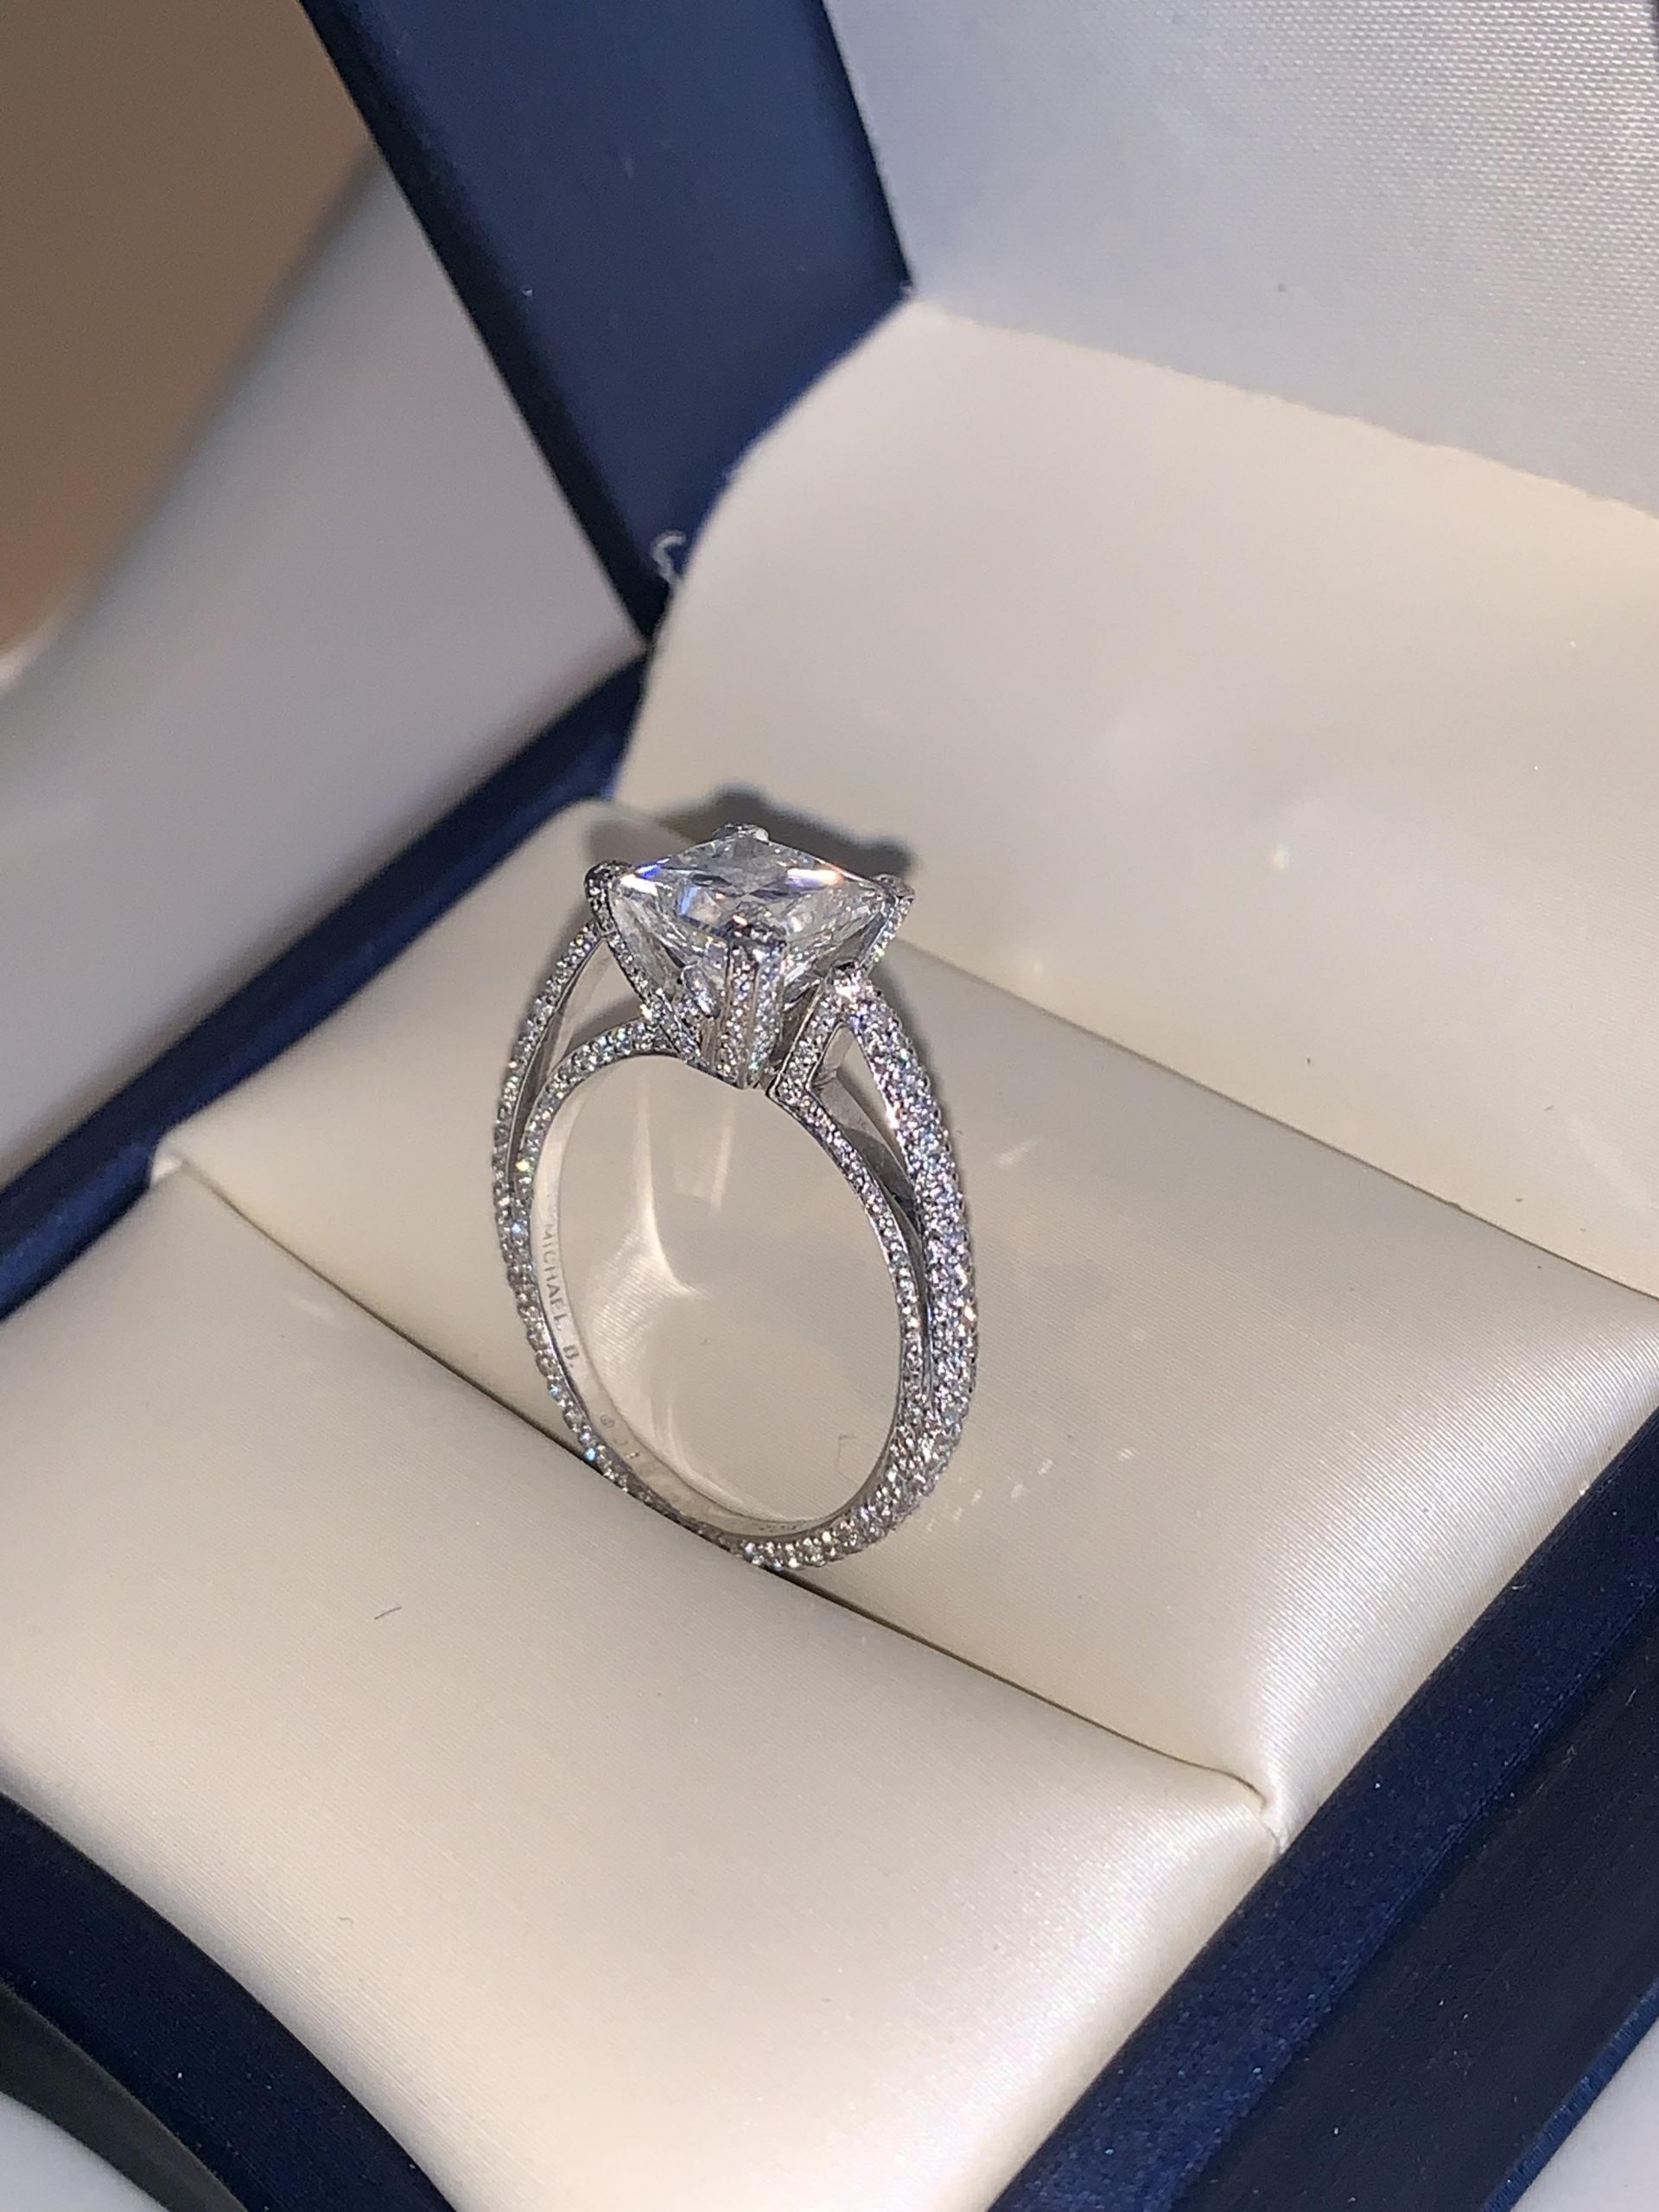 2 Carat Princess Cut Engagement Ring
 Platinum 2 carat Princess Cut diamond engagement ring